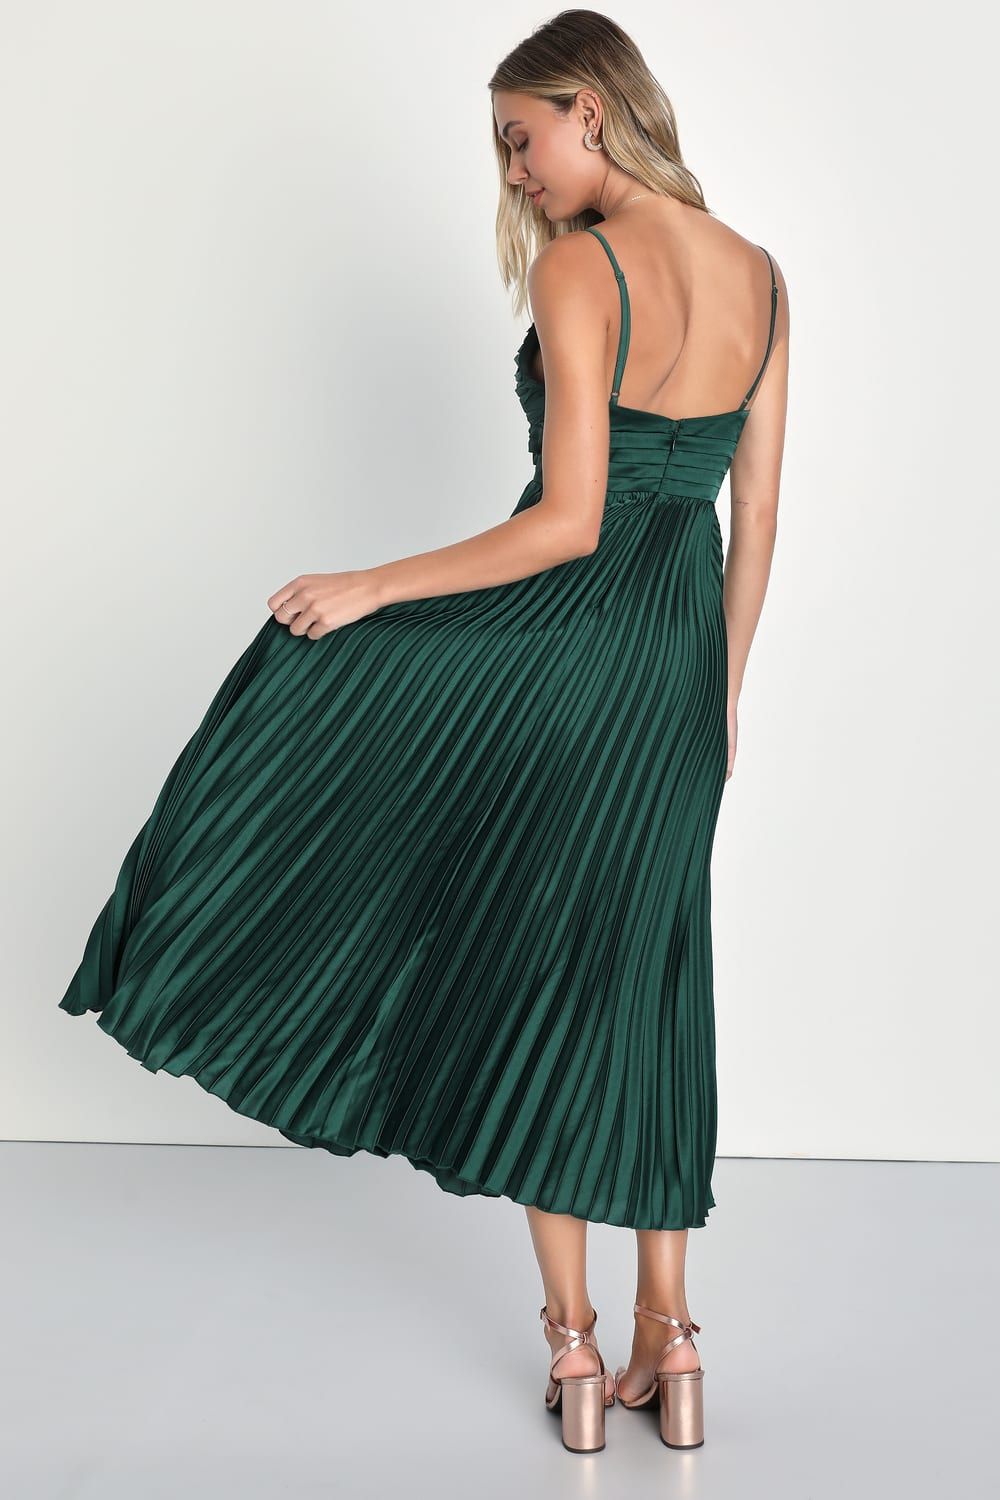 Fabulous Perfection Emerald Green Satin Pleated Midi Dress | Lulus (US)